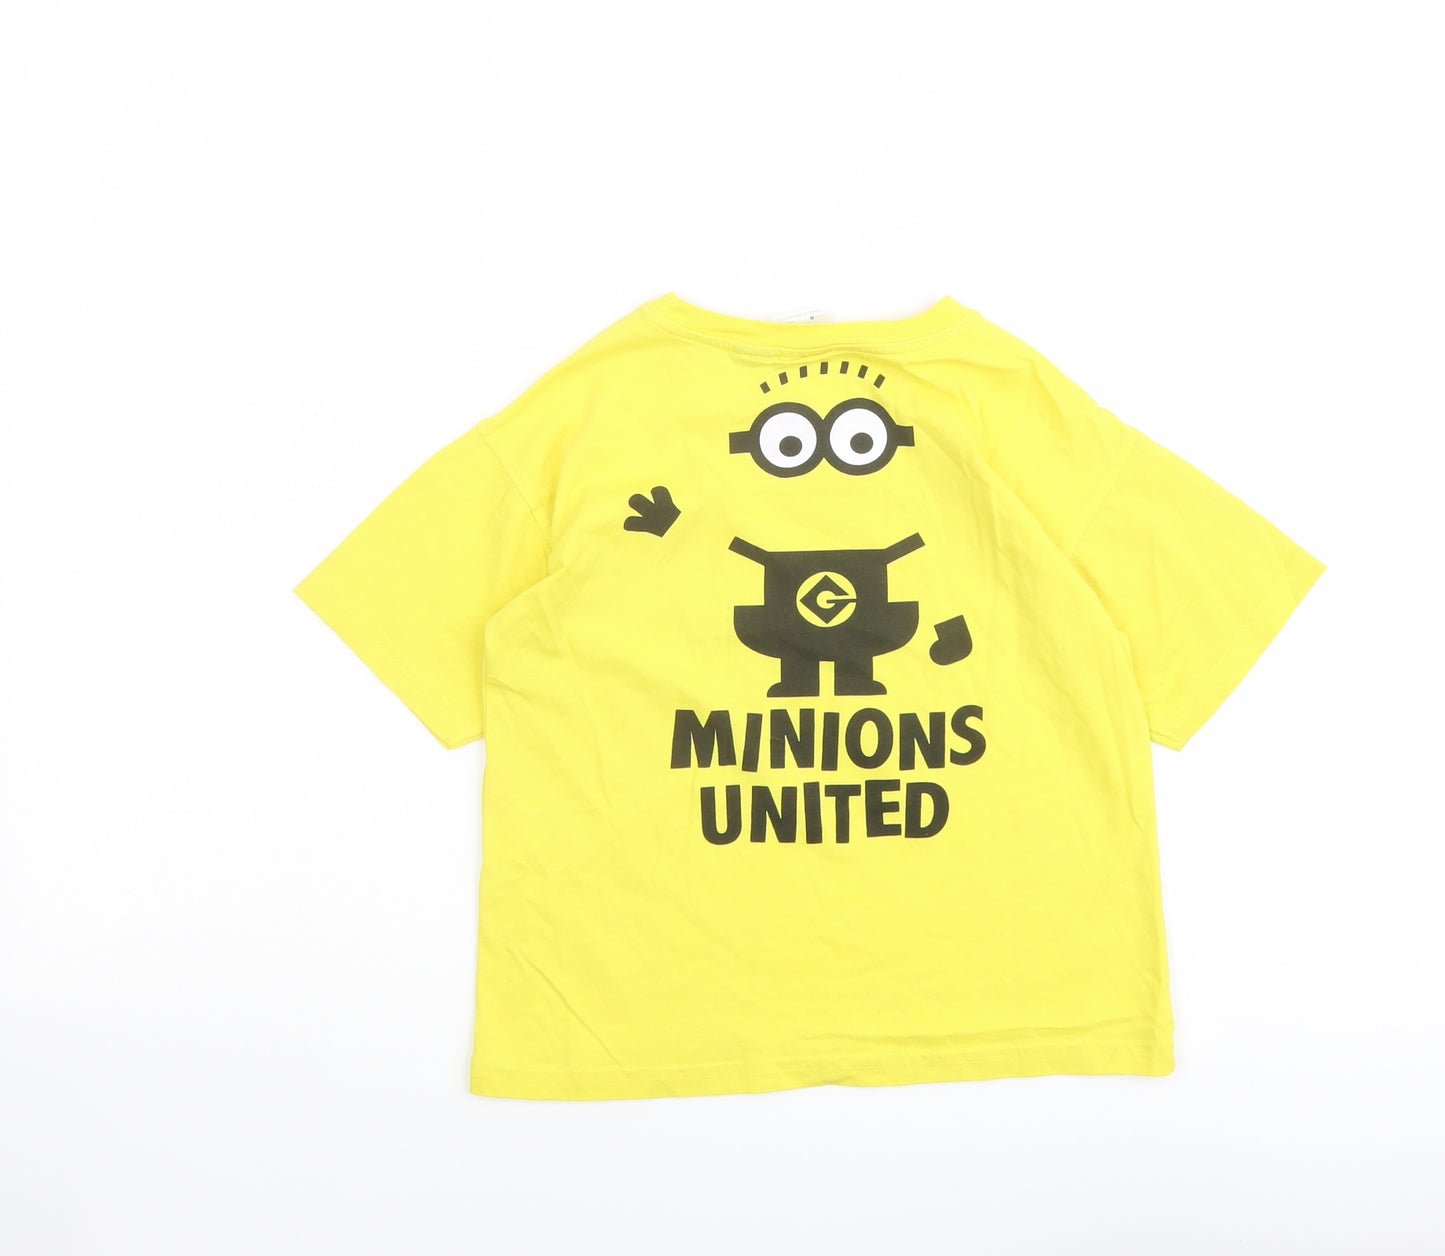 Zara Boys Yellow Cotton Basic T-Shirt Size 6 Years Round Neck Pullover - Minions